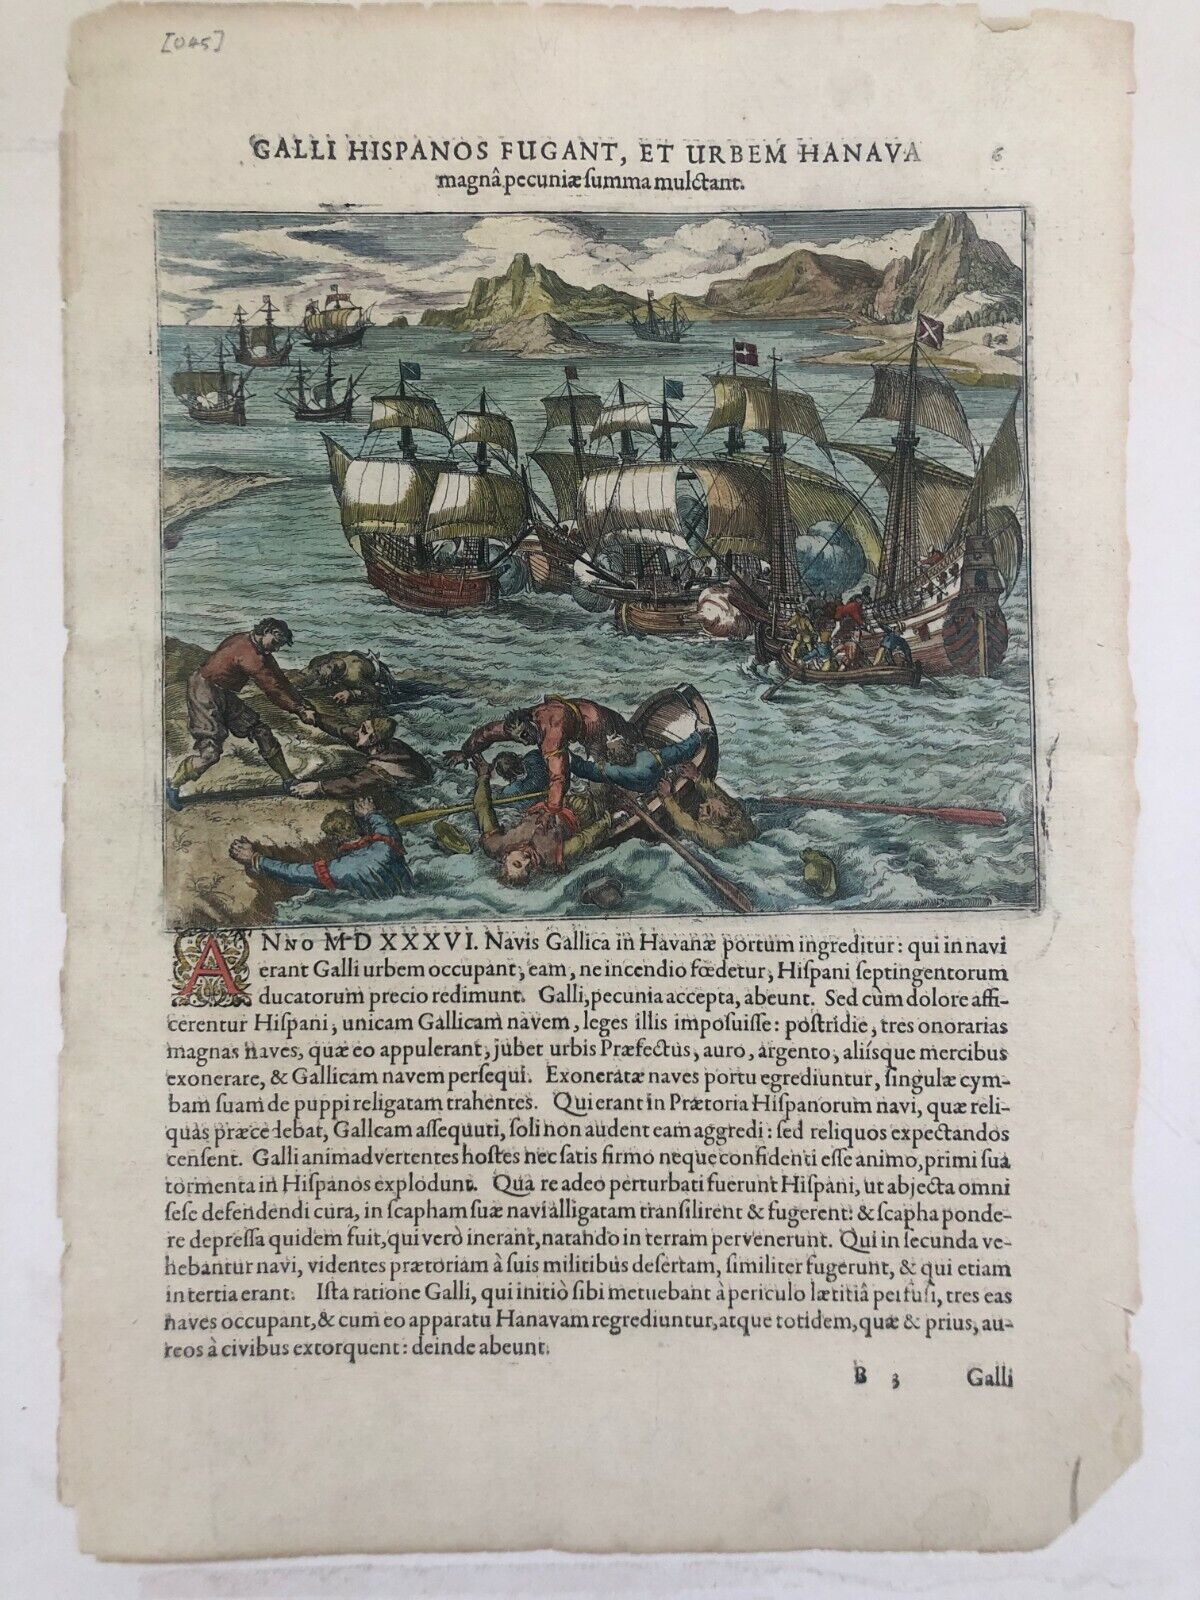 De Bry - "The French defeat the Spanish at Havana" 1595 - Cuba